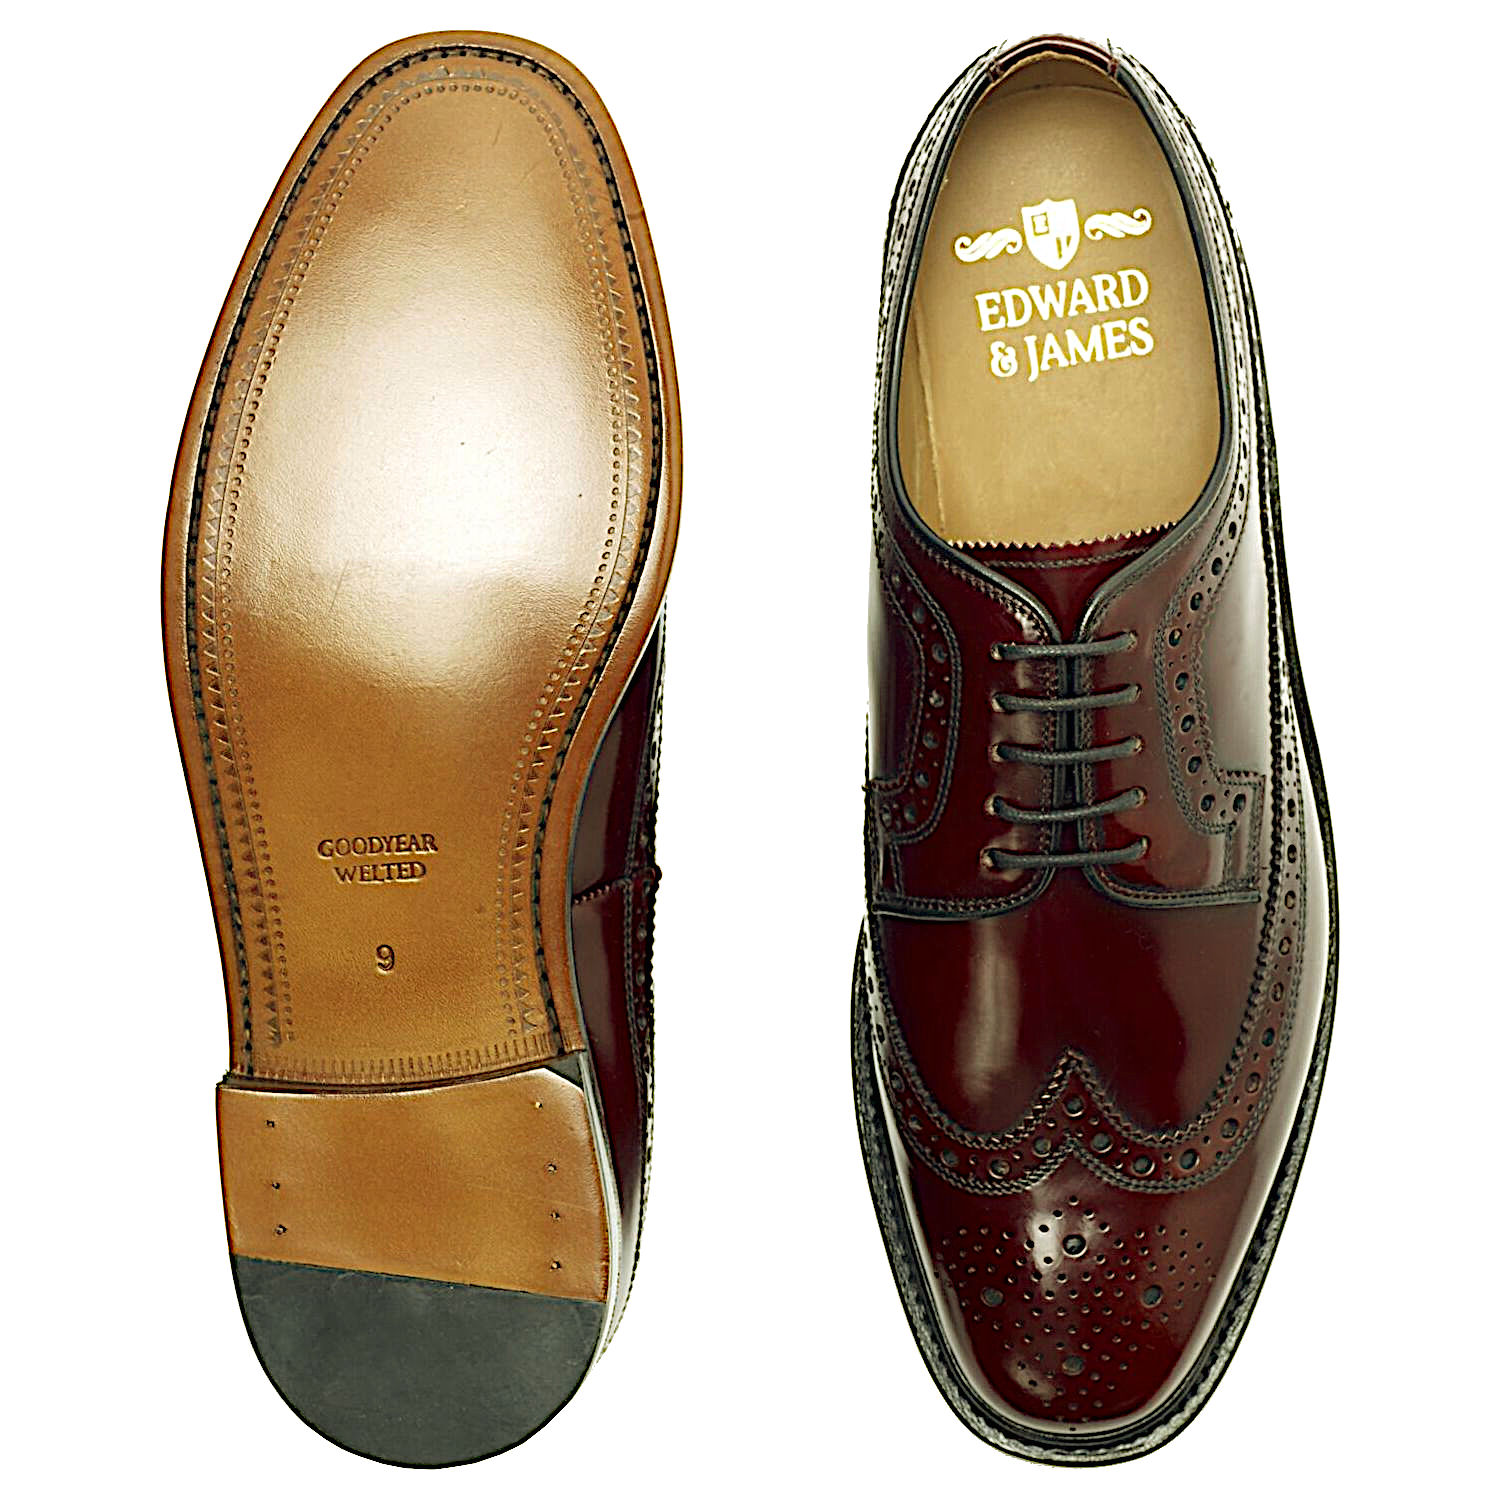 Edward and James Anthony Burgundy Leather Sole - Pediwear Footwear